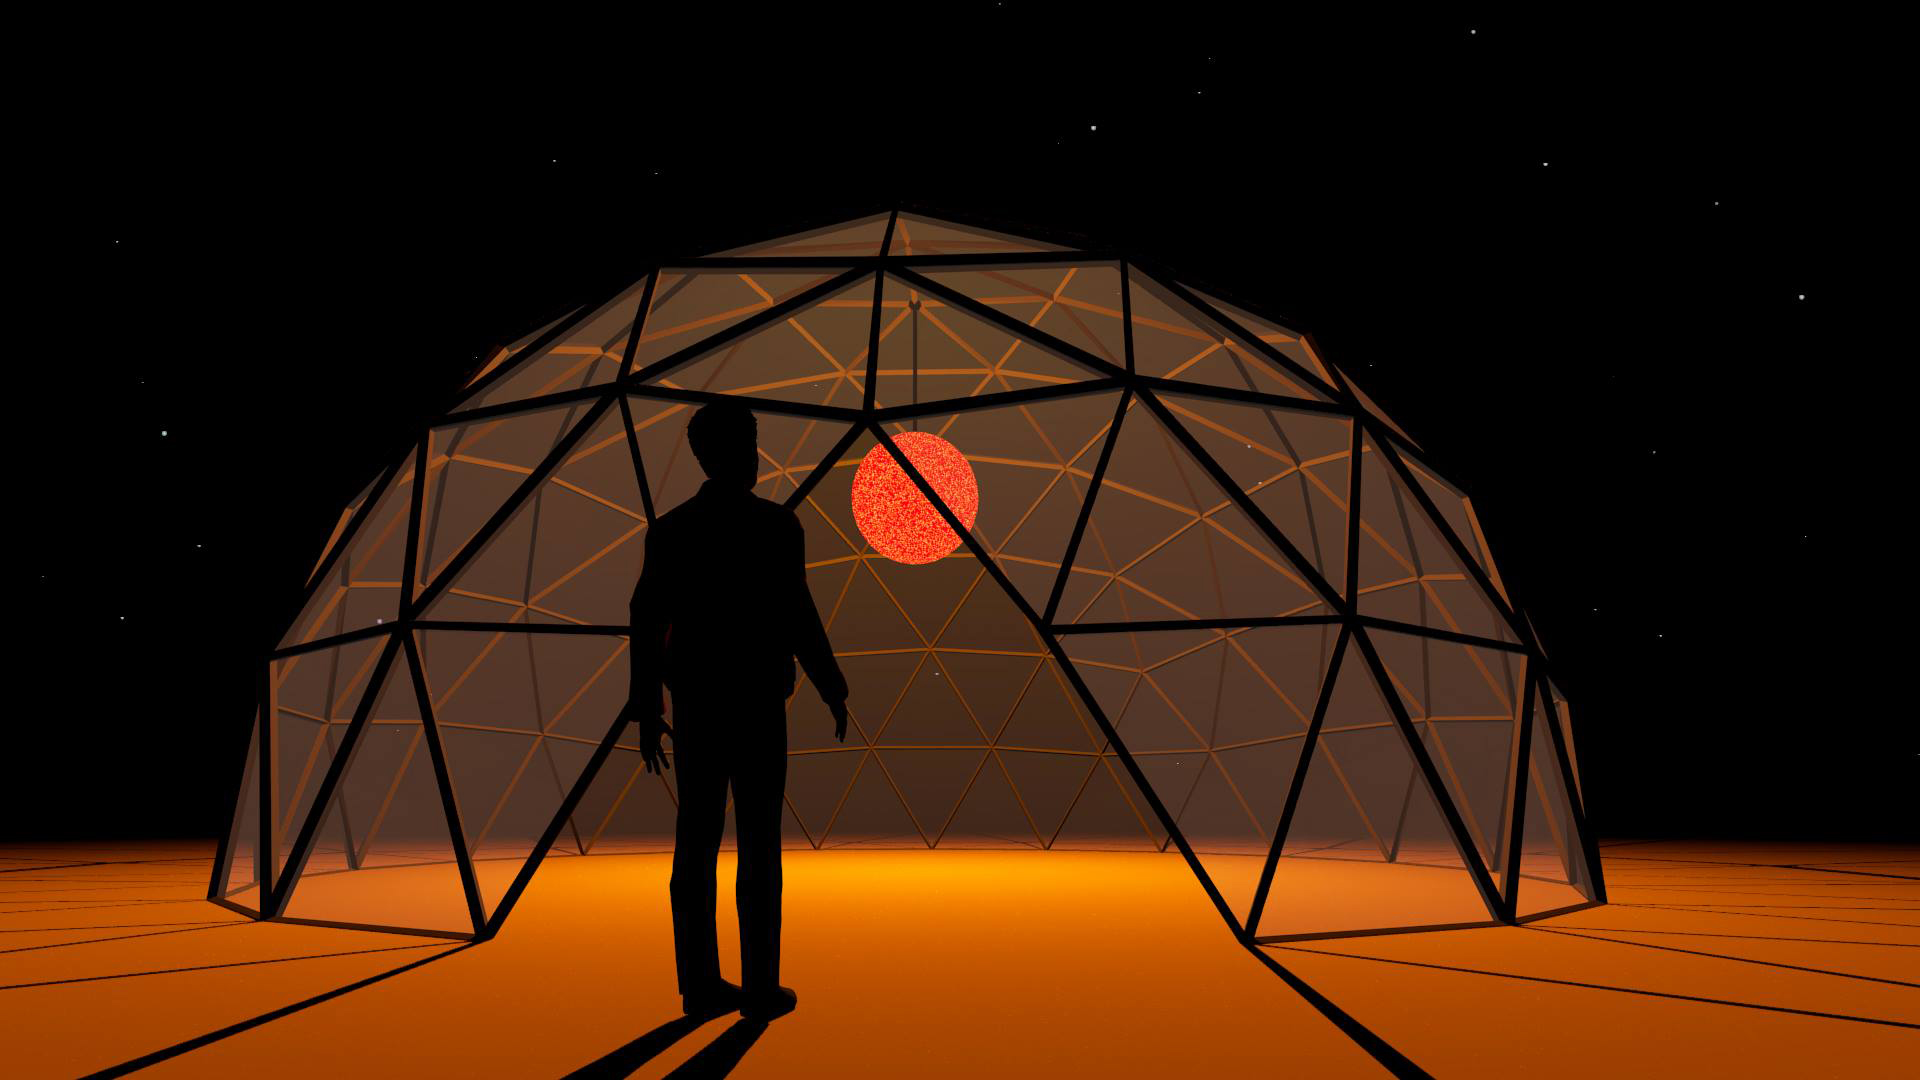 Sun Dome art installation rendering